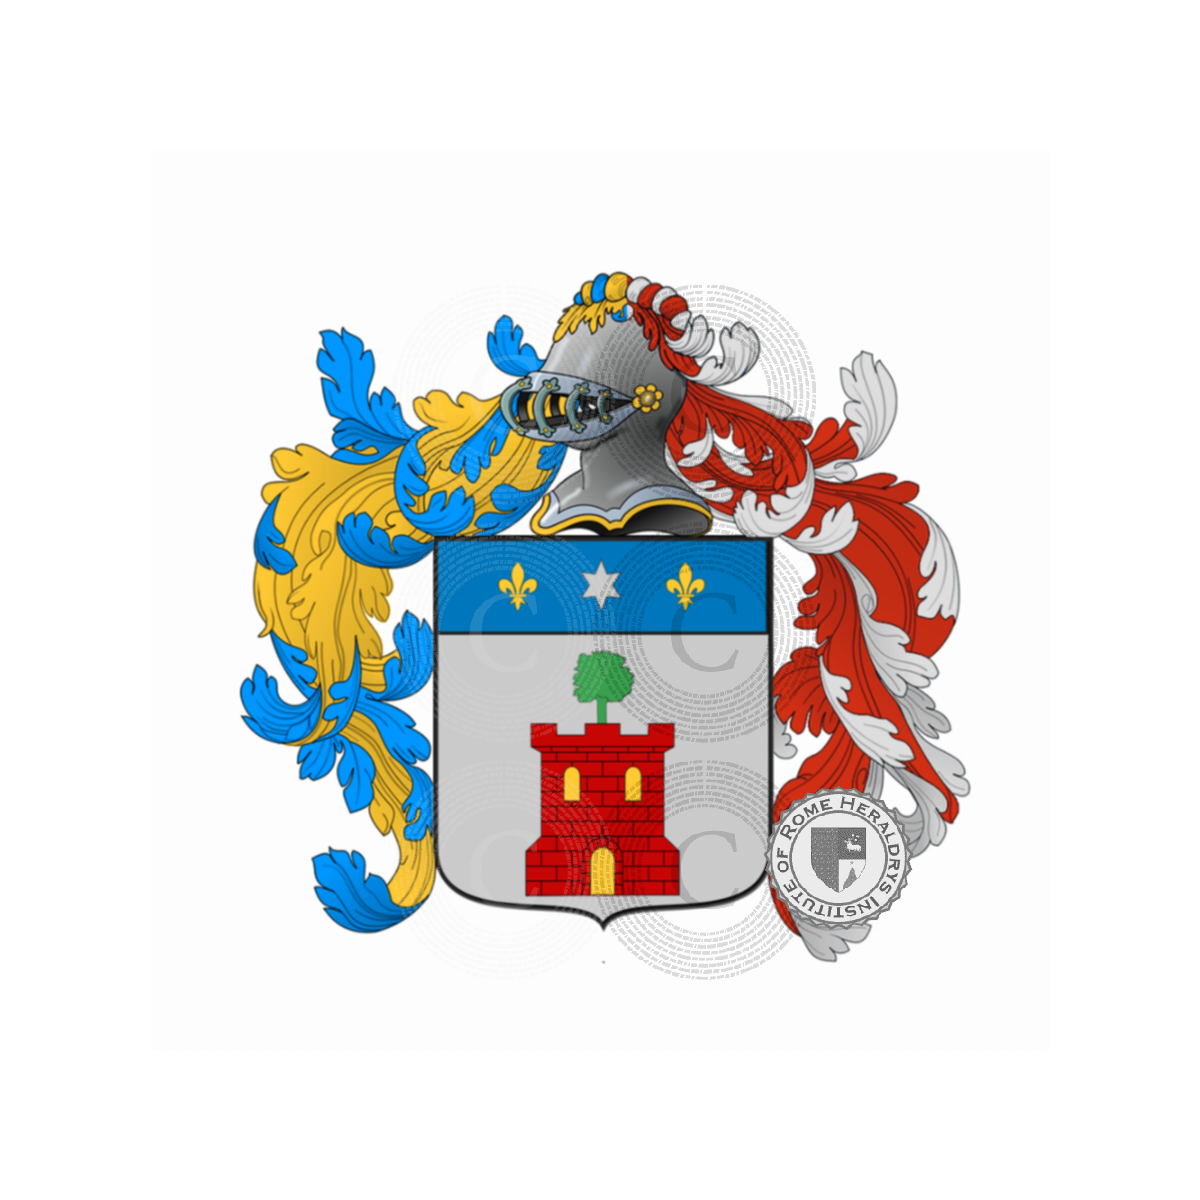 Wappen der FamilieVicari or Vicarioli